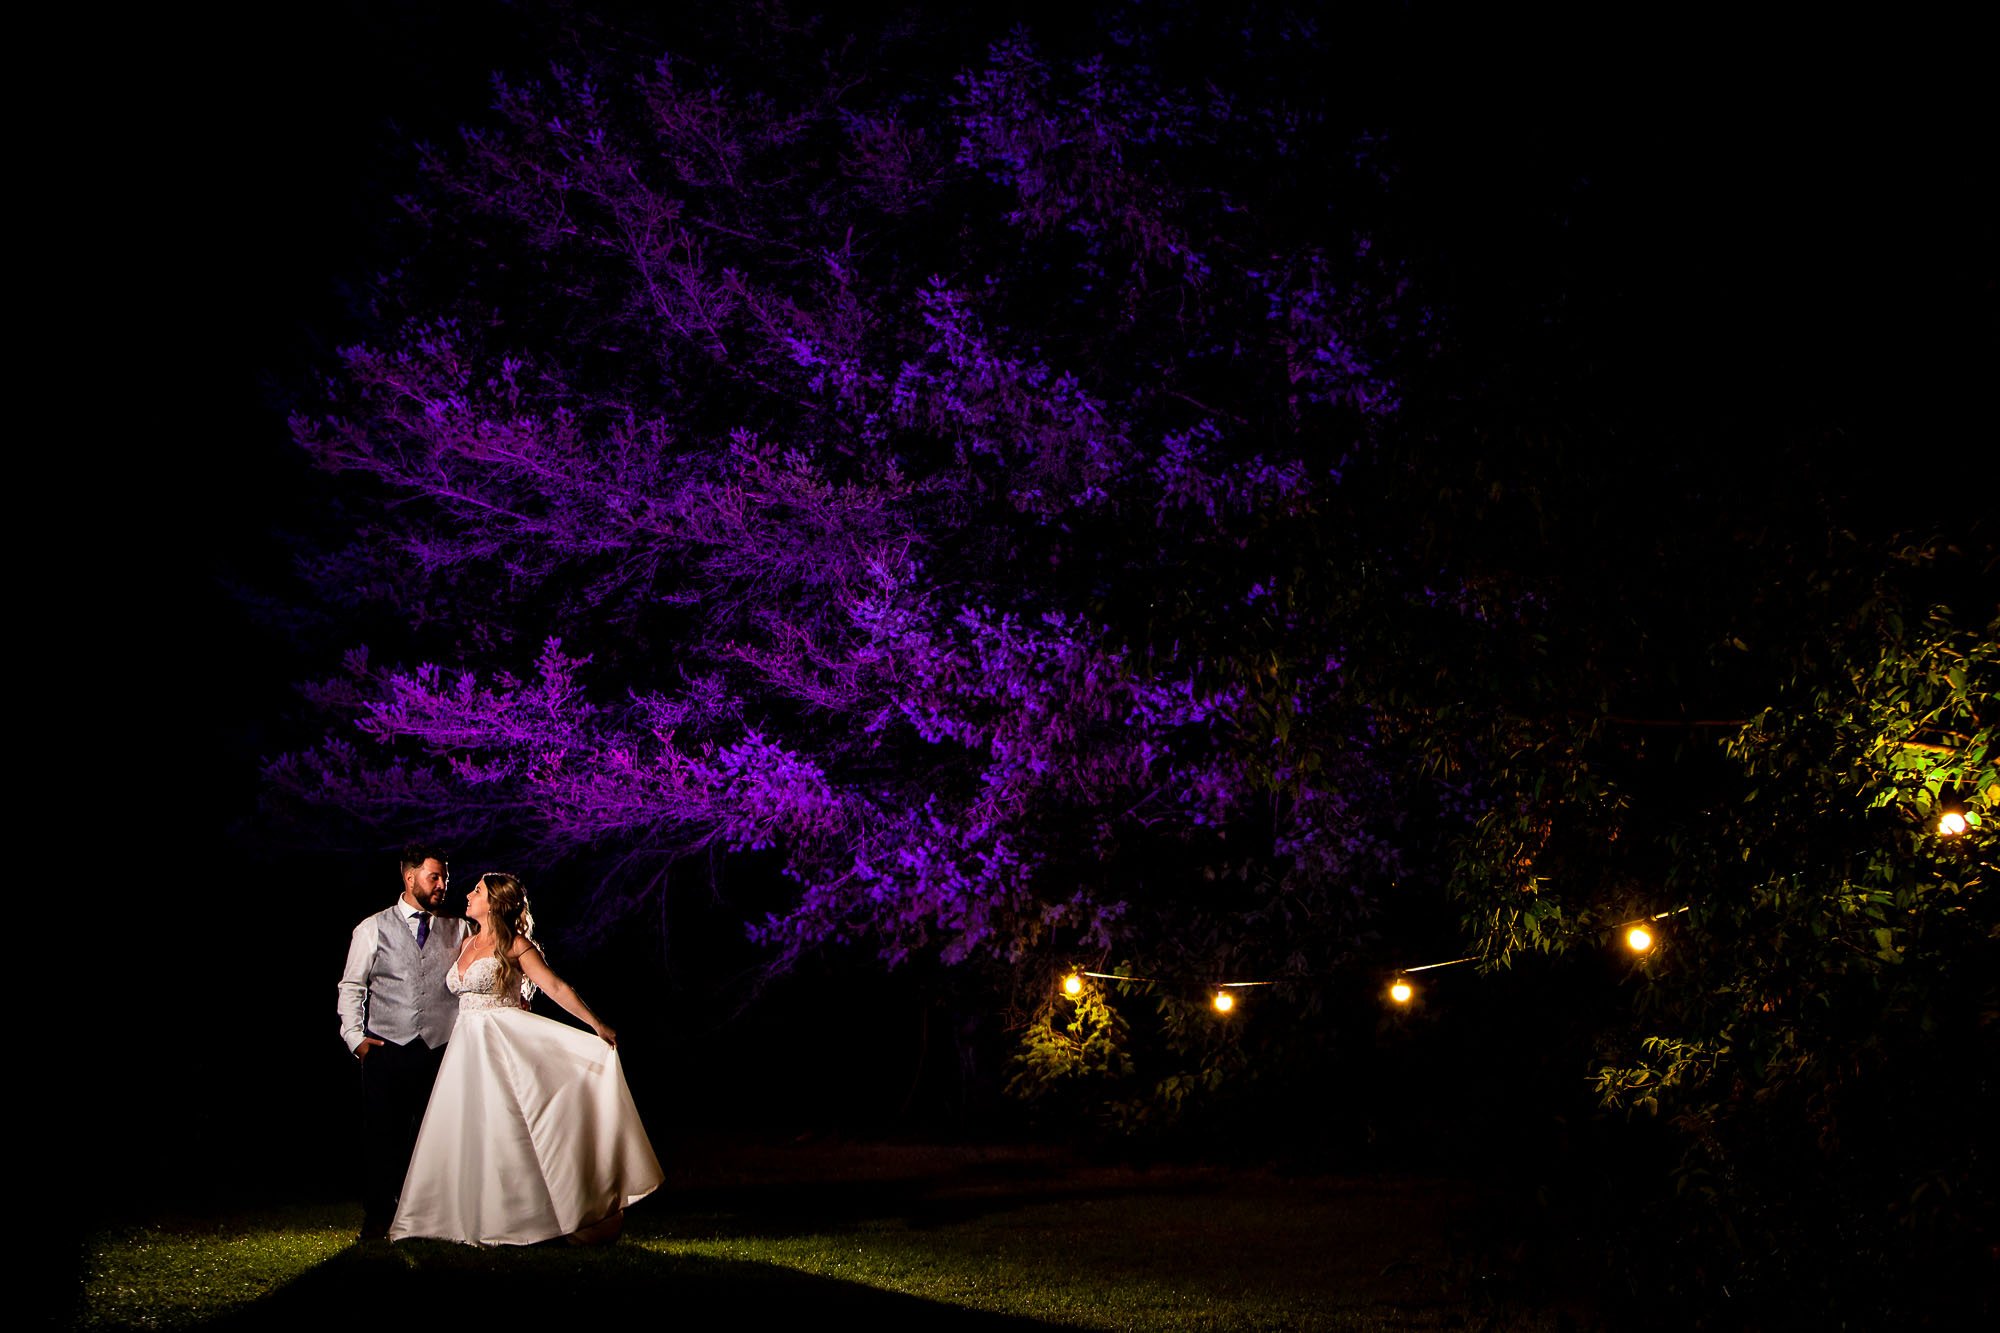 backyard-weddings-ideas-7.jpg